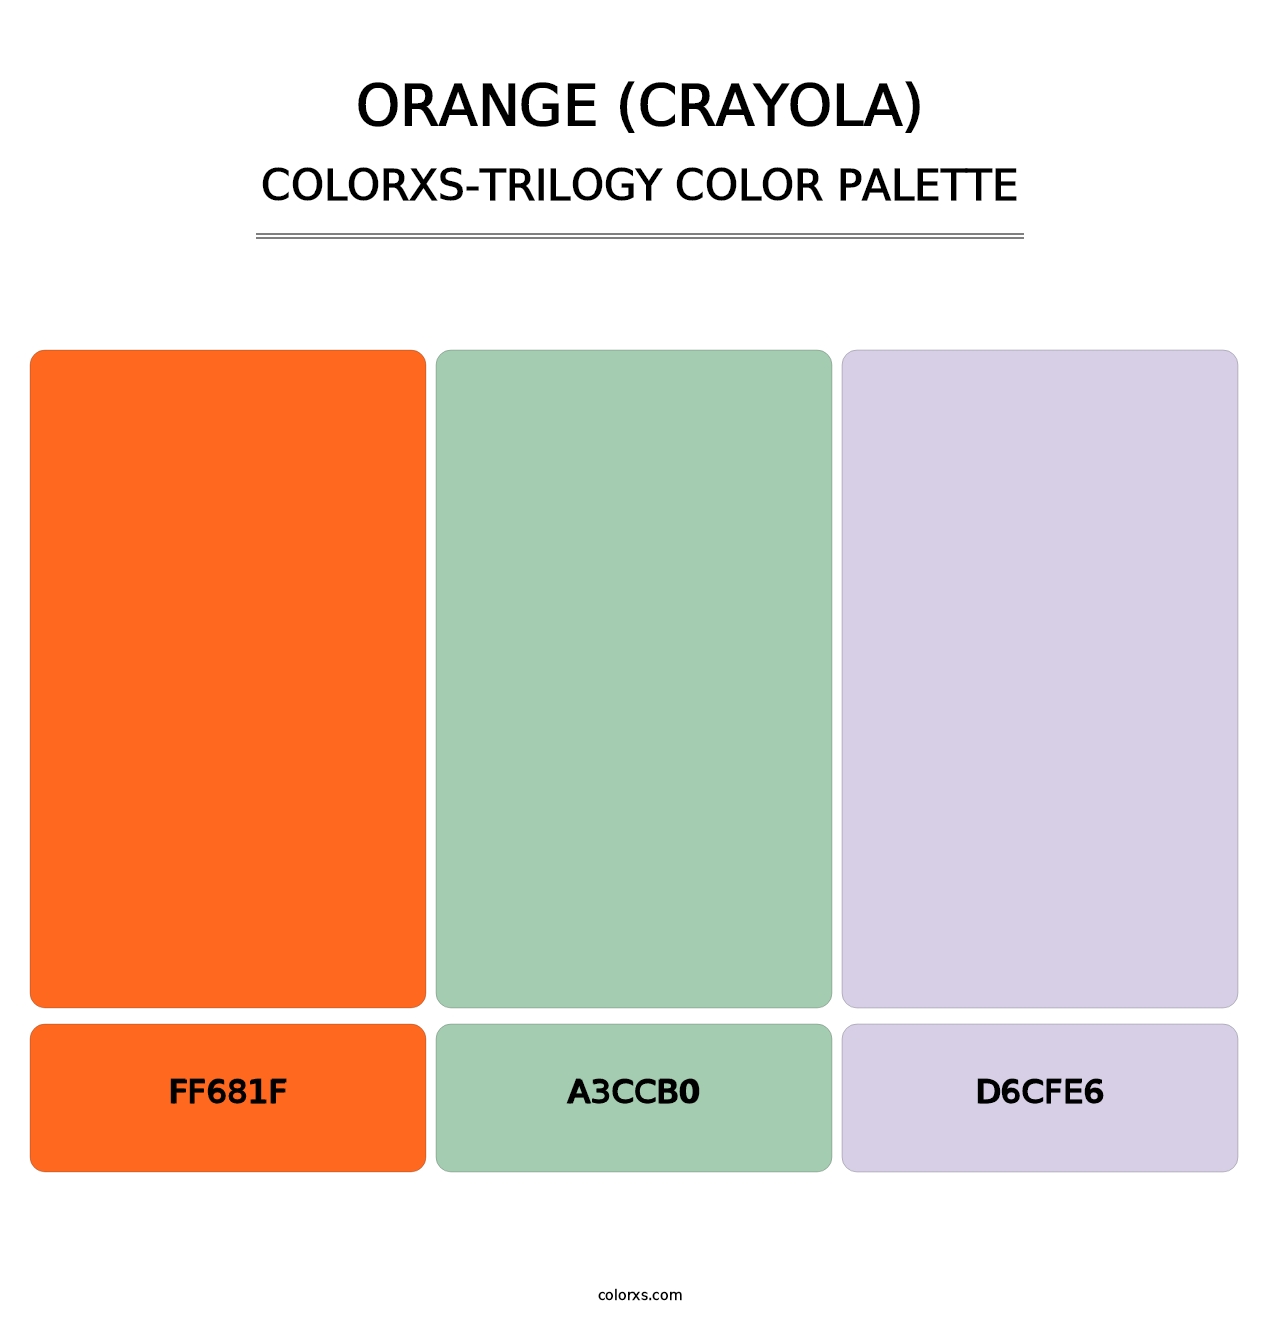 Orange (Crayola) - Colorxs Trilogy Palette